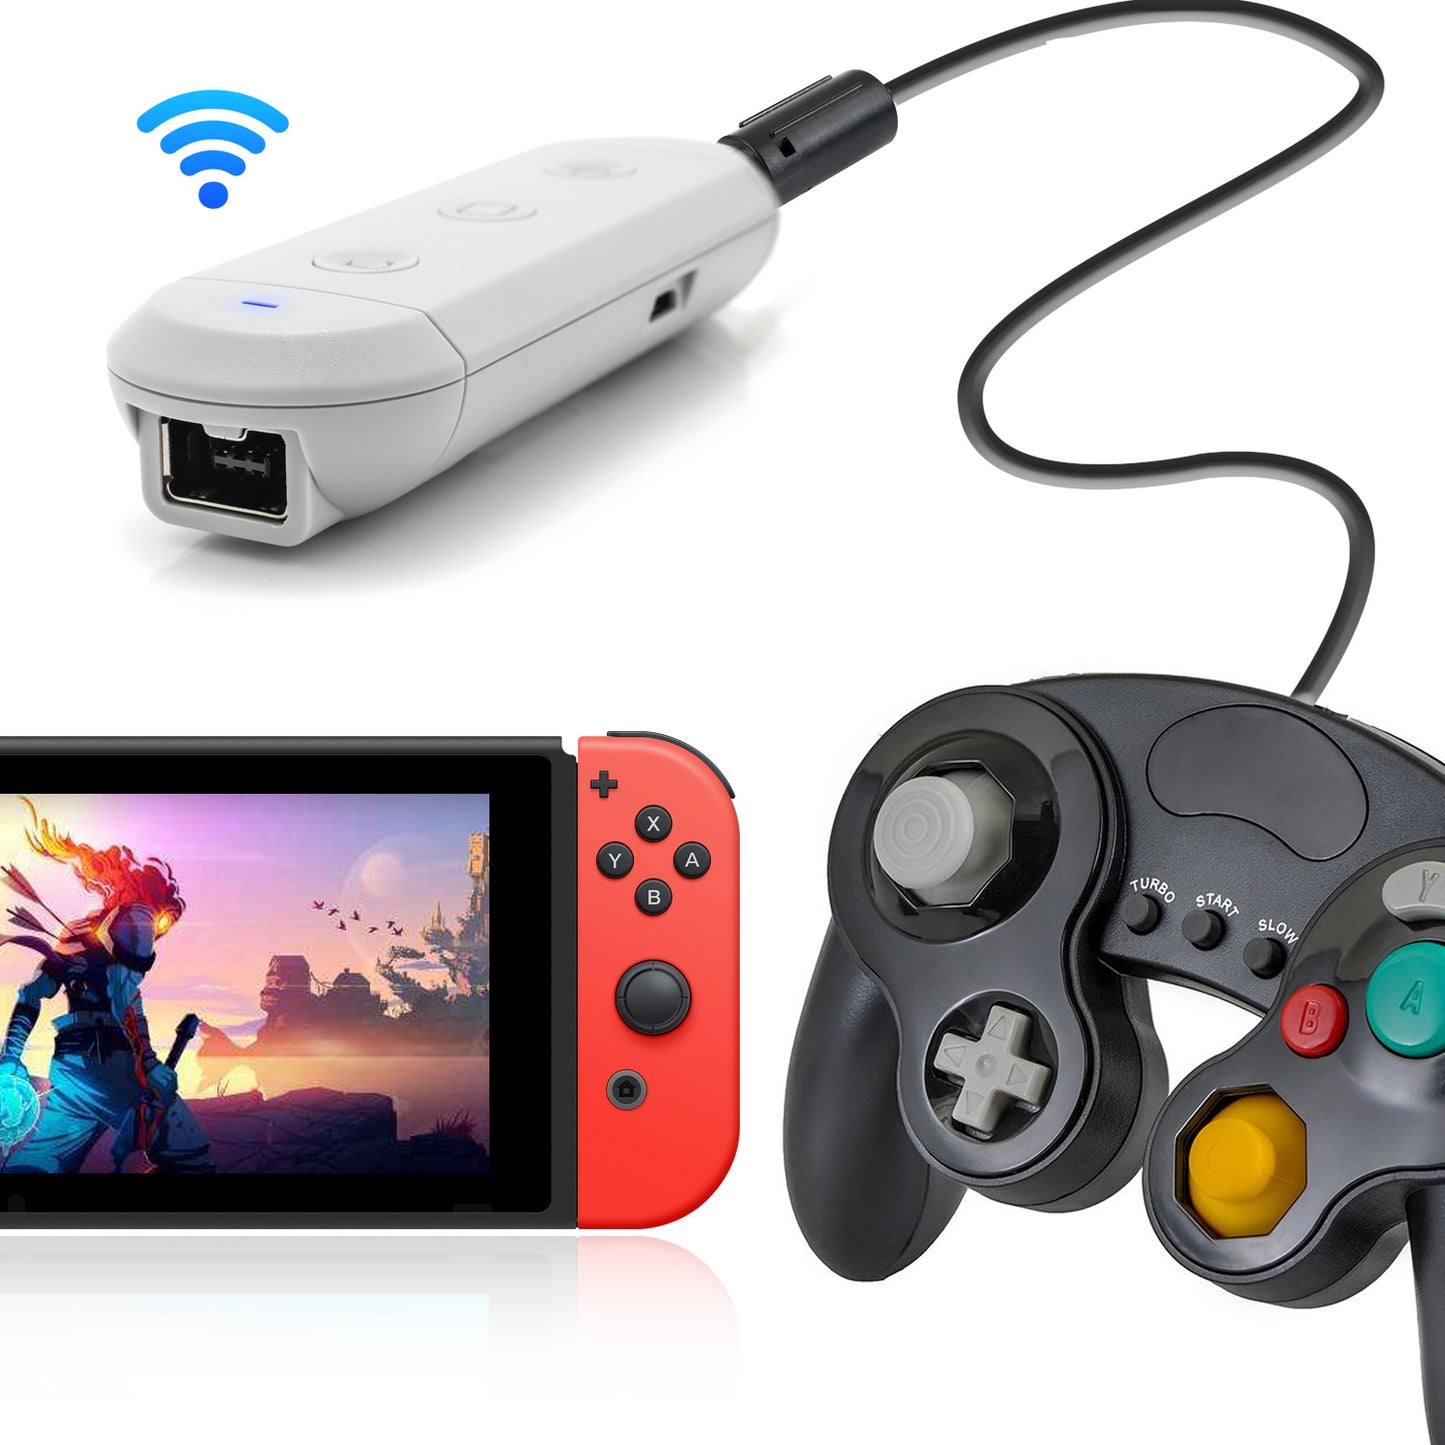 GameCube classics we want on Nintendo Switch